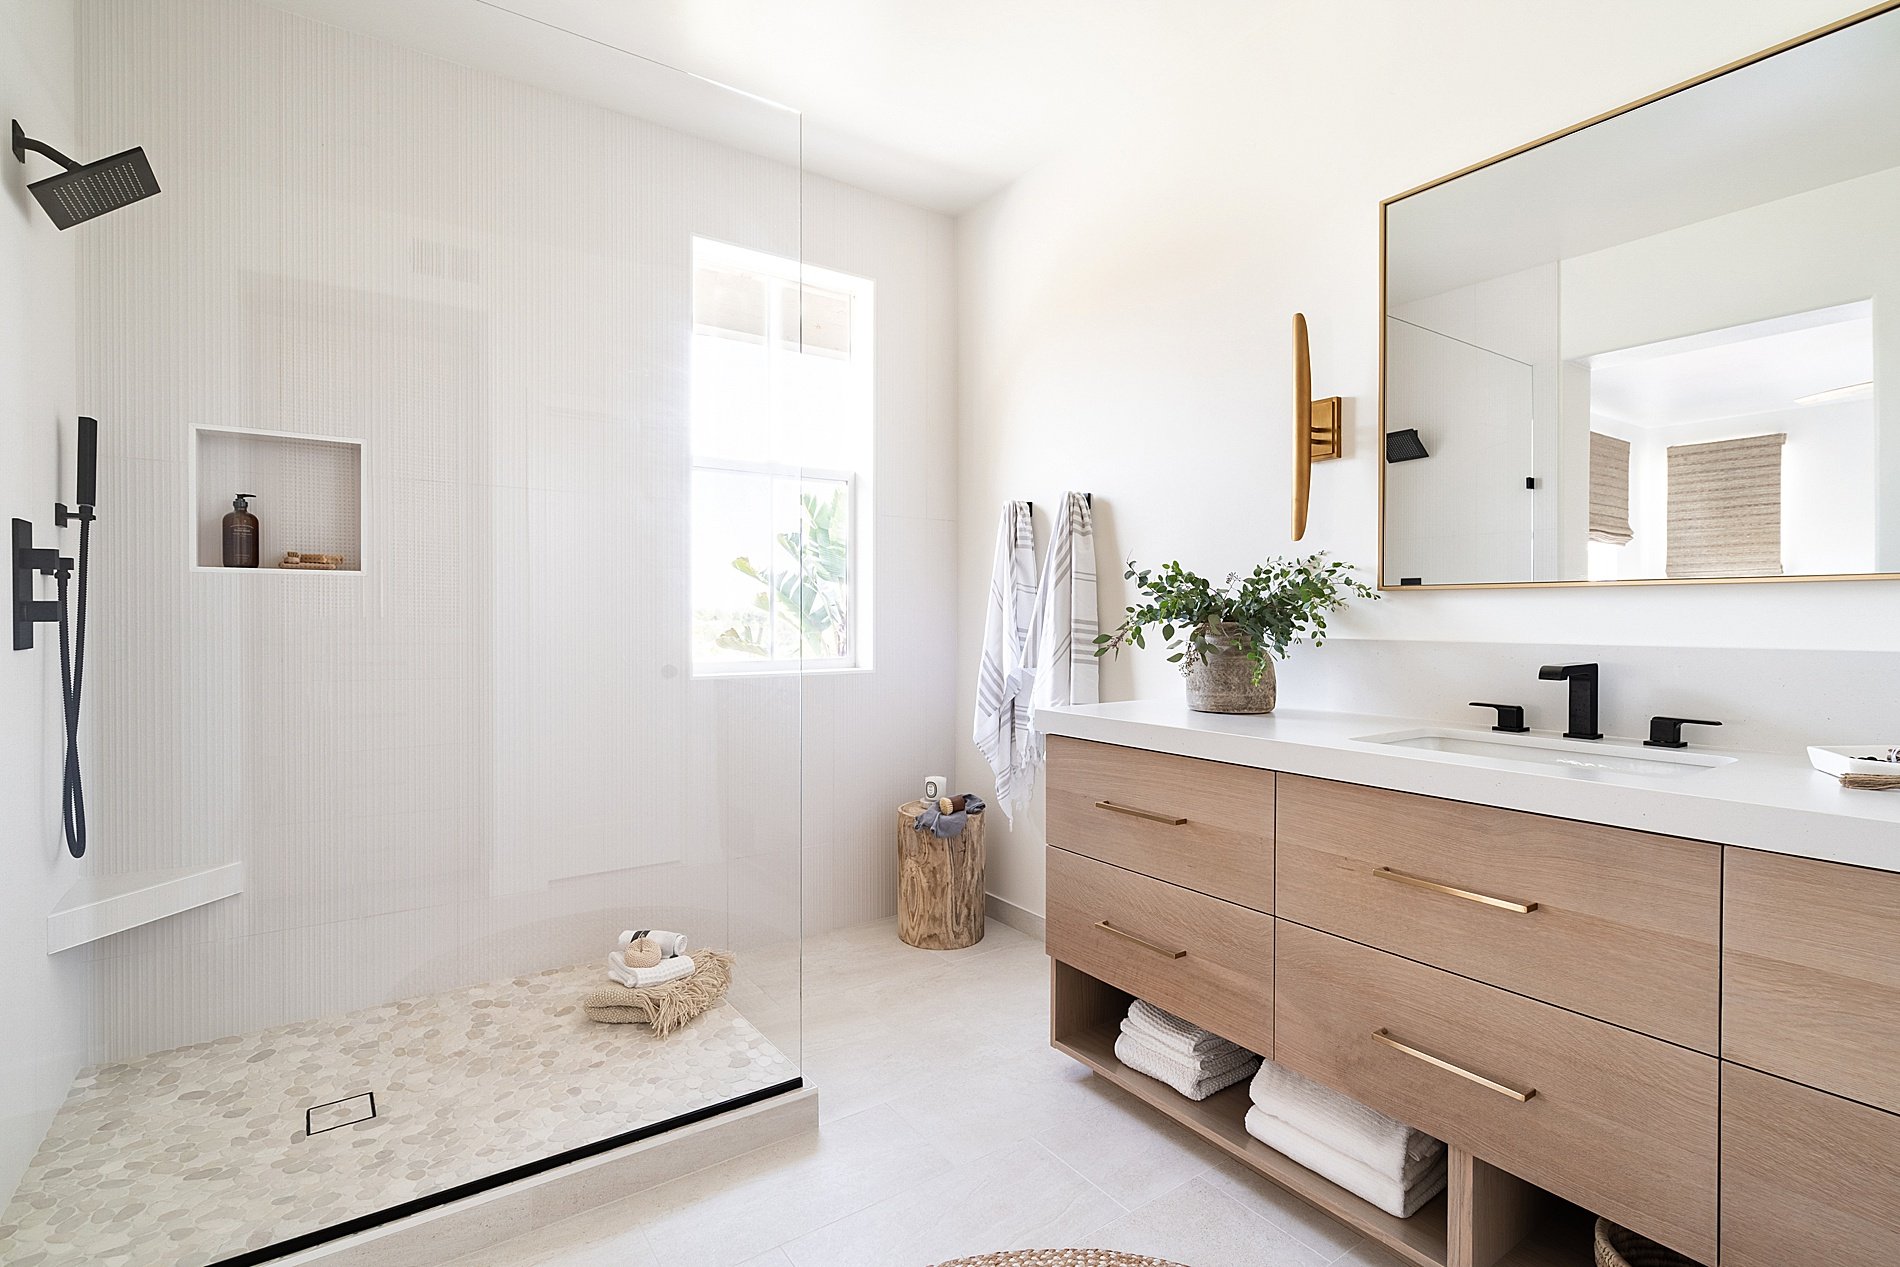  A Modern Oasis bathroom by San Diego Interior Designer Keri Michelle Interiors  